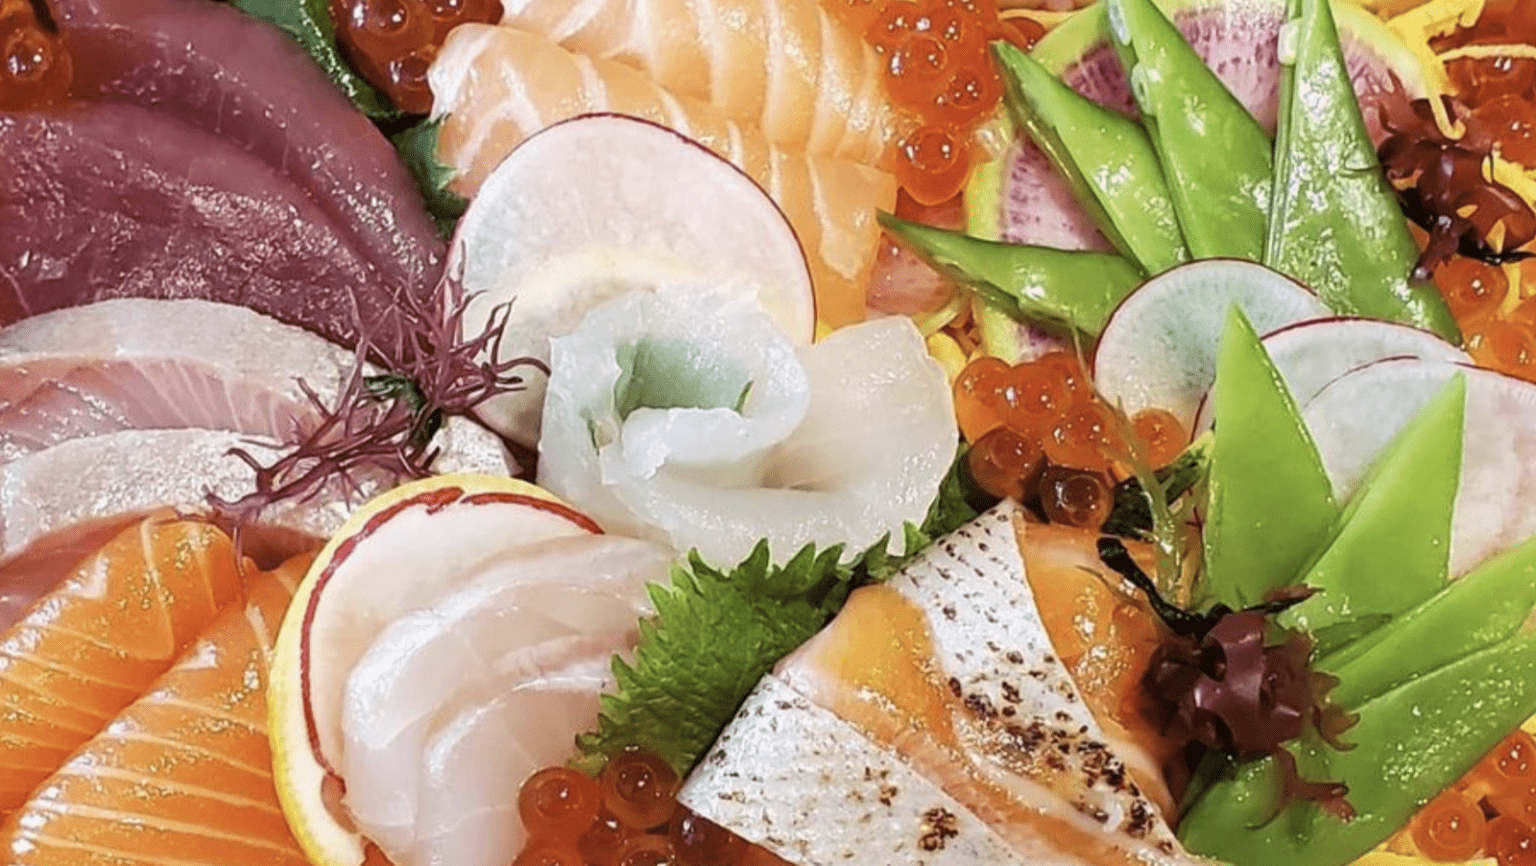 Kuma-Sushi-SF-Sushi-@kumasushisf-800x450-1-1536x866